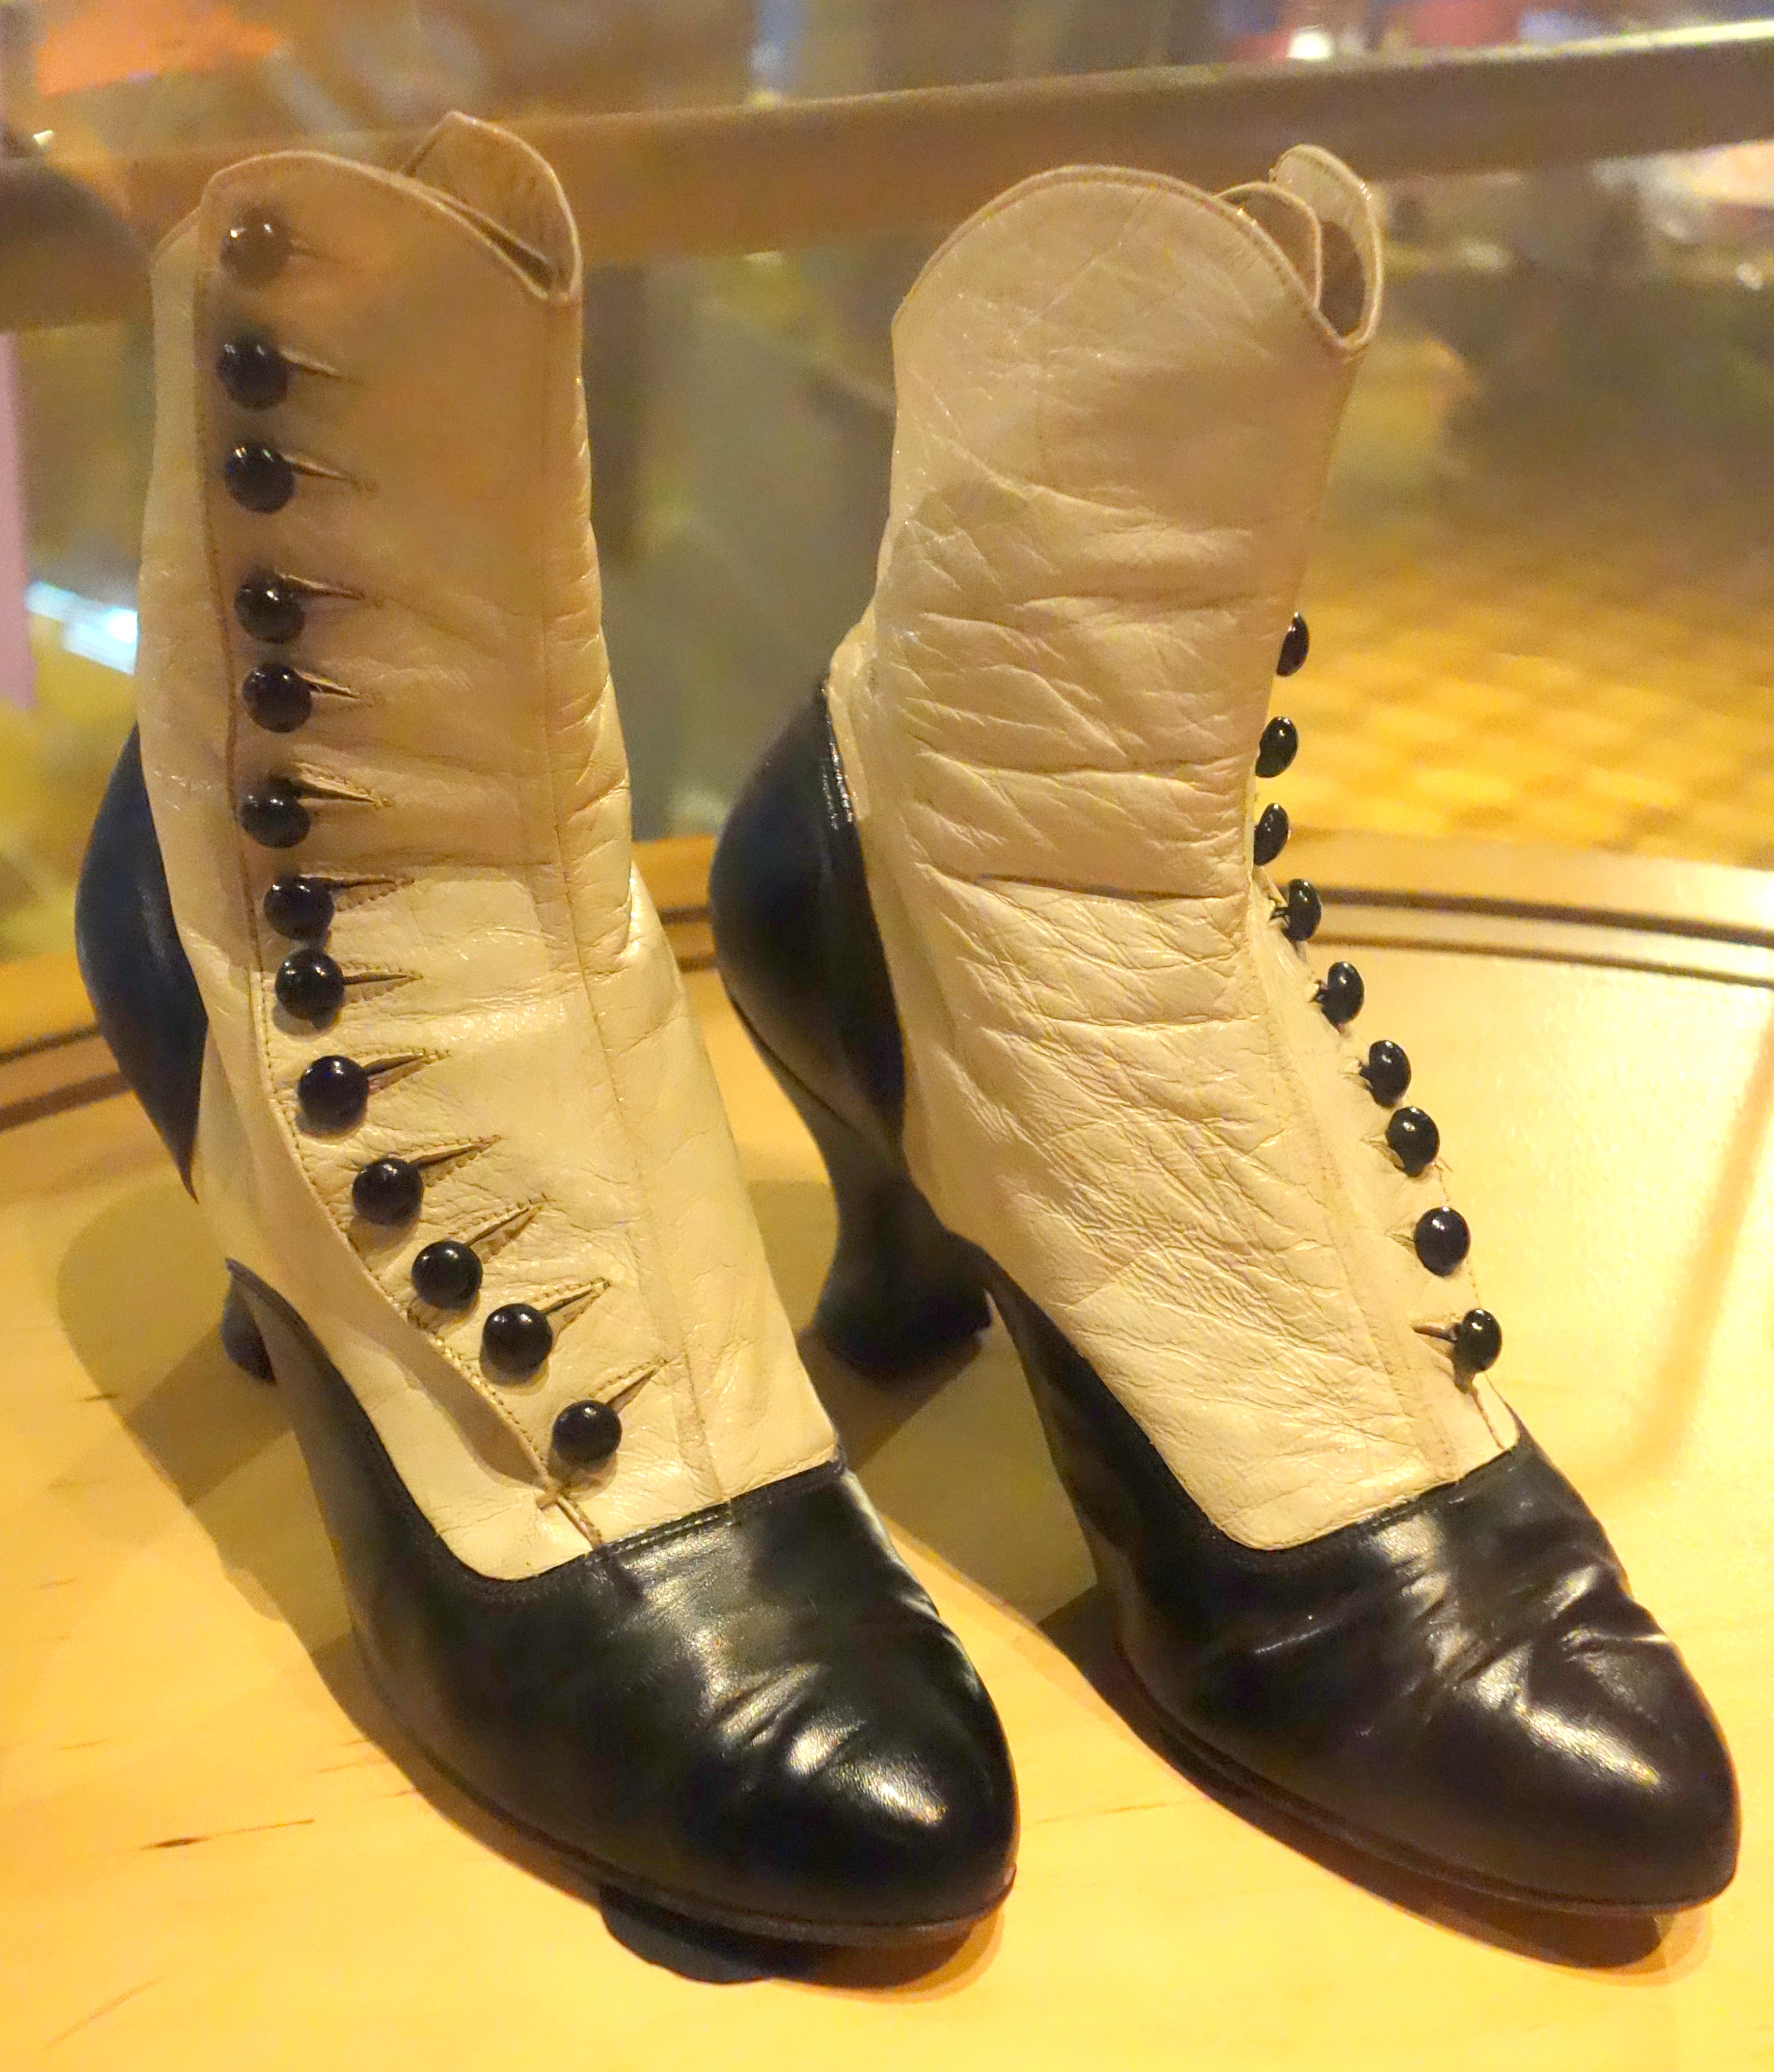 File:Boots worn by Judy Garland in The Harvey Girls, 1945 - Bata Shoe  Museum - DSC00345.JPG - Wikimedia Commons